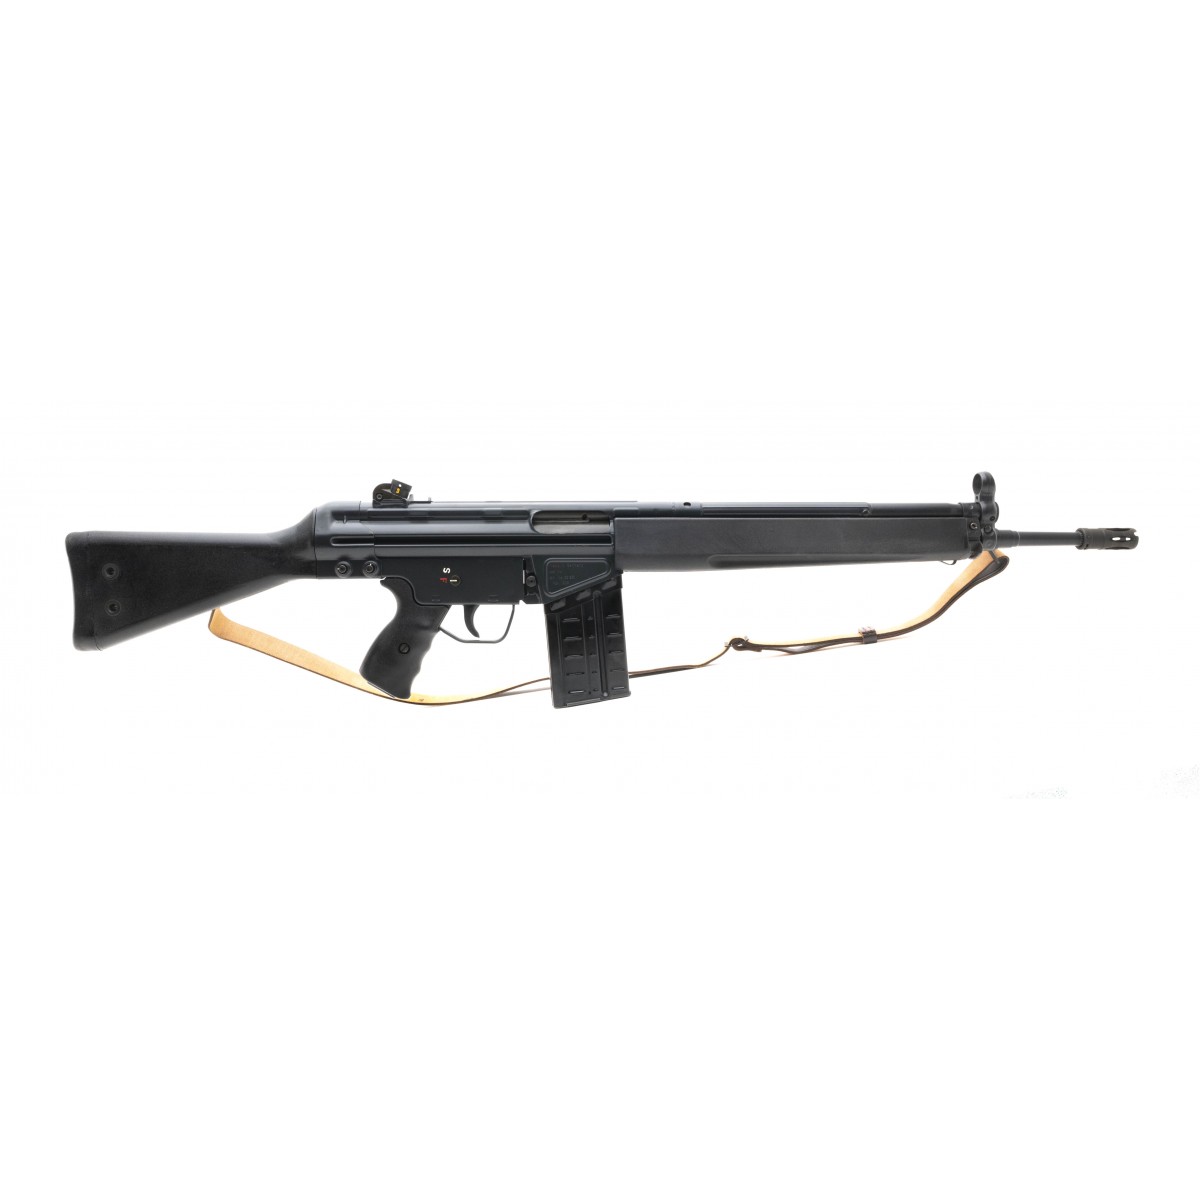 Heckler & Koch 91 .308 Win caliber rifle for sale.